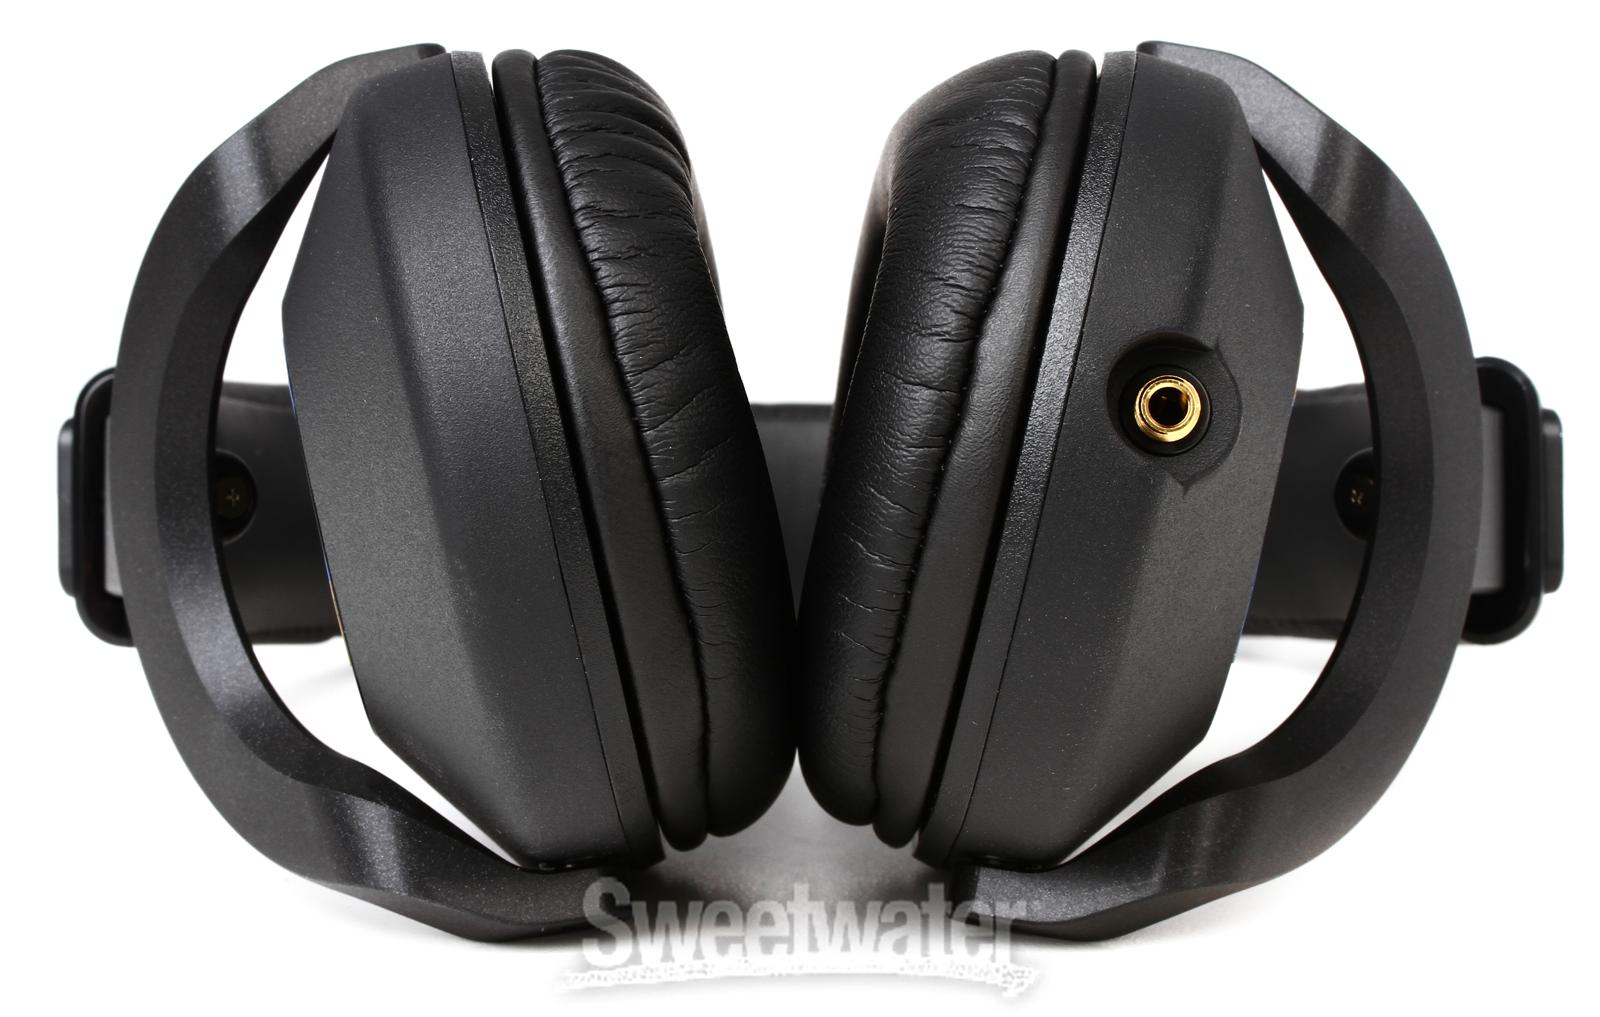 Sony MDR 7520 Closed Ear Studio Headphones